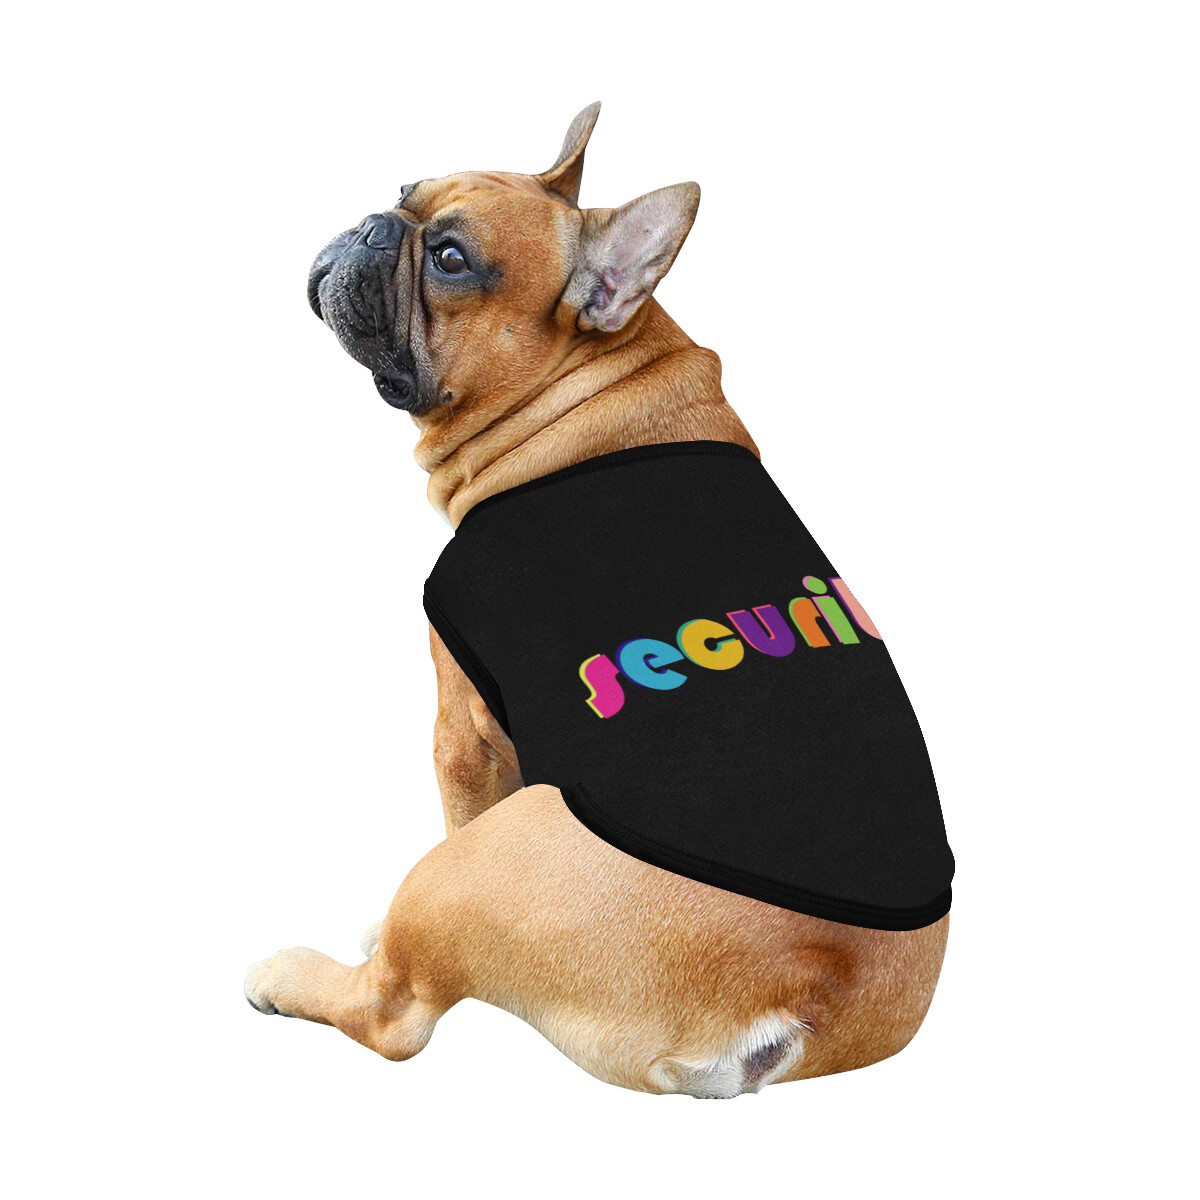 🐕 Security Dog Tank Top, Dog shirt, Dog clothes, Gifts, front back print, 7 sizes XS to 3XL, dog t-shirt, dog t-shirt, dog gift, black